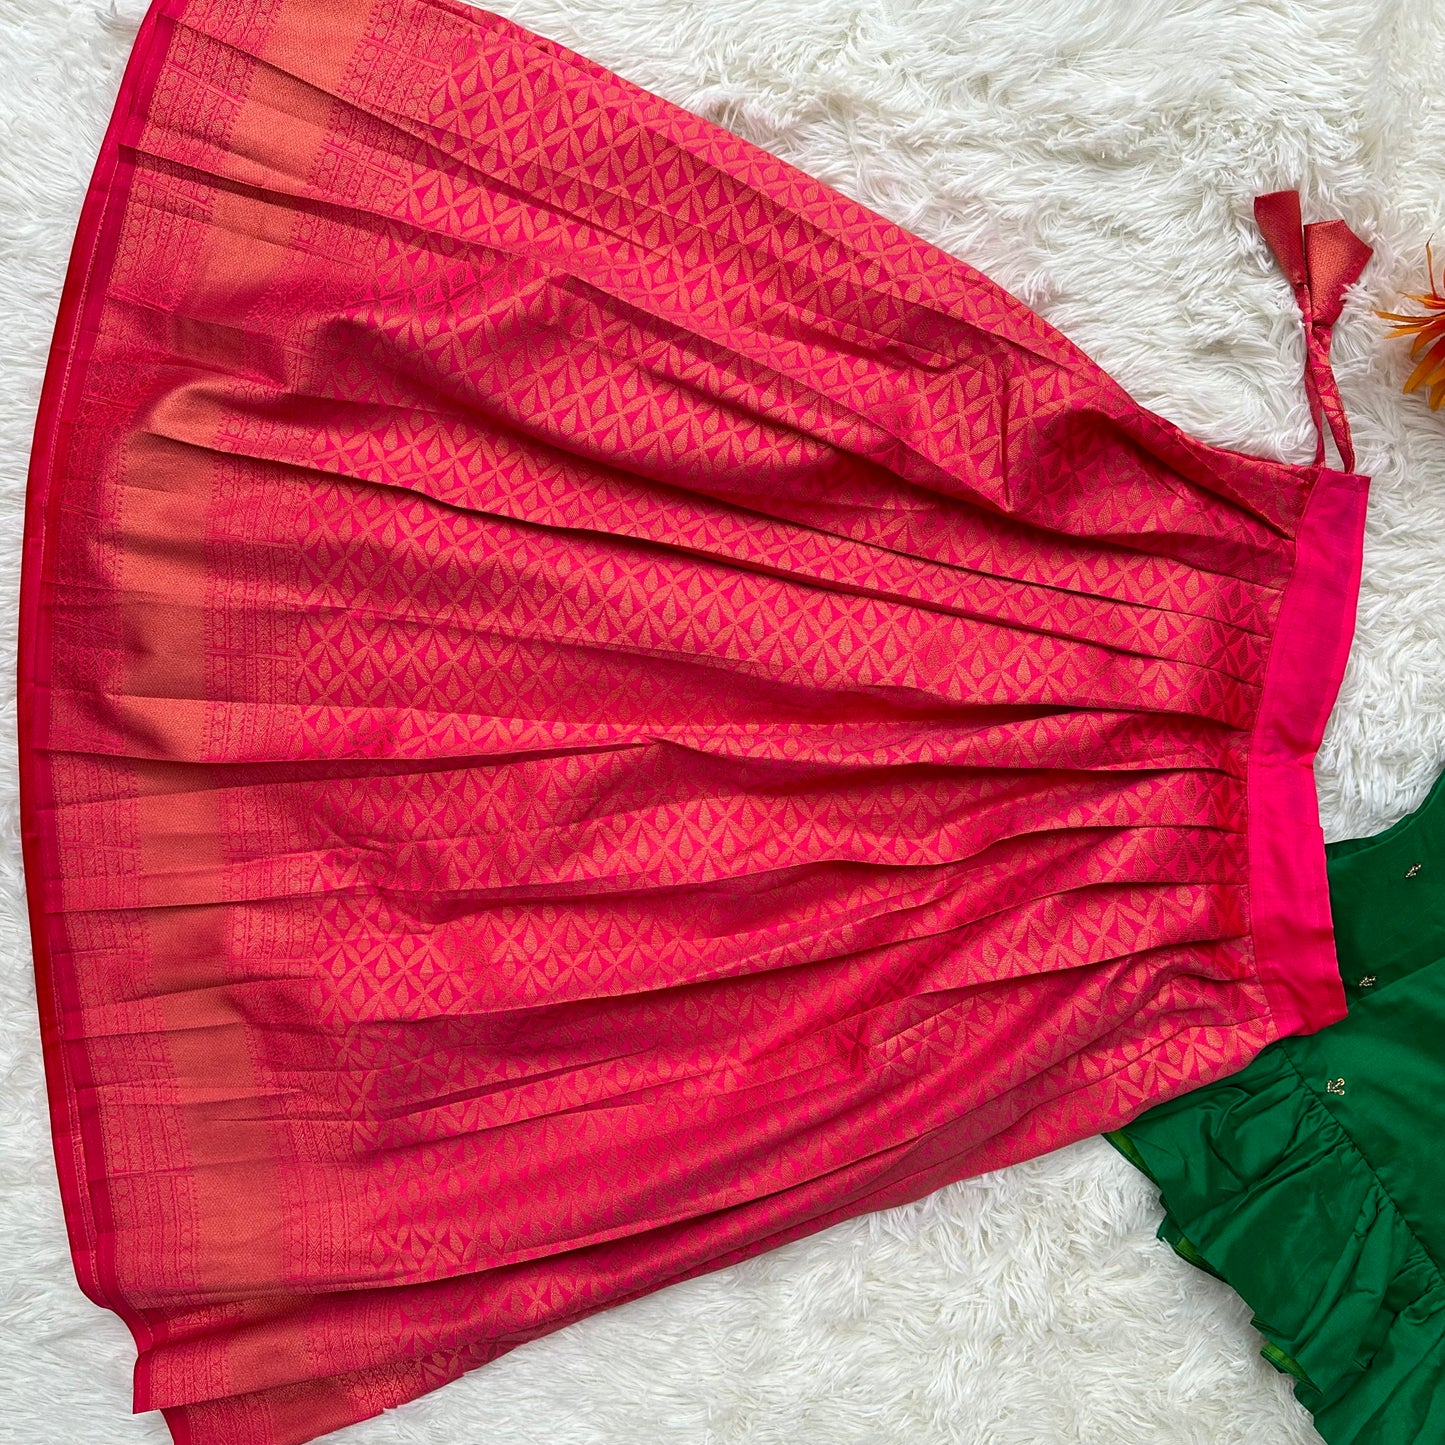 Lush Harmony: Green peplum Top with aari work and Pink semi silk Skirt